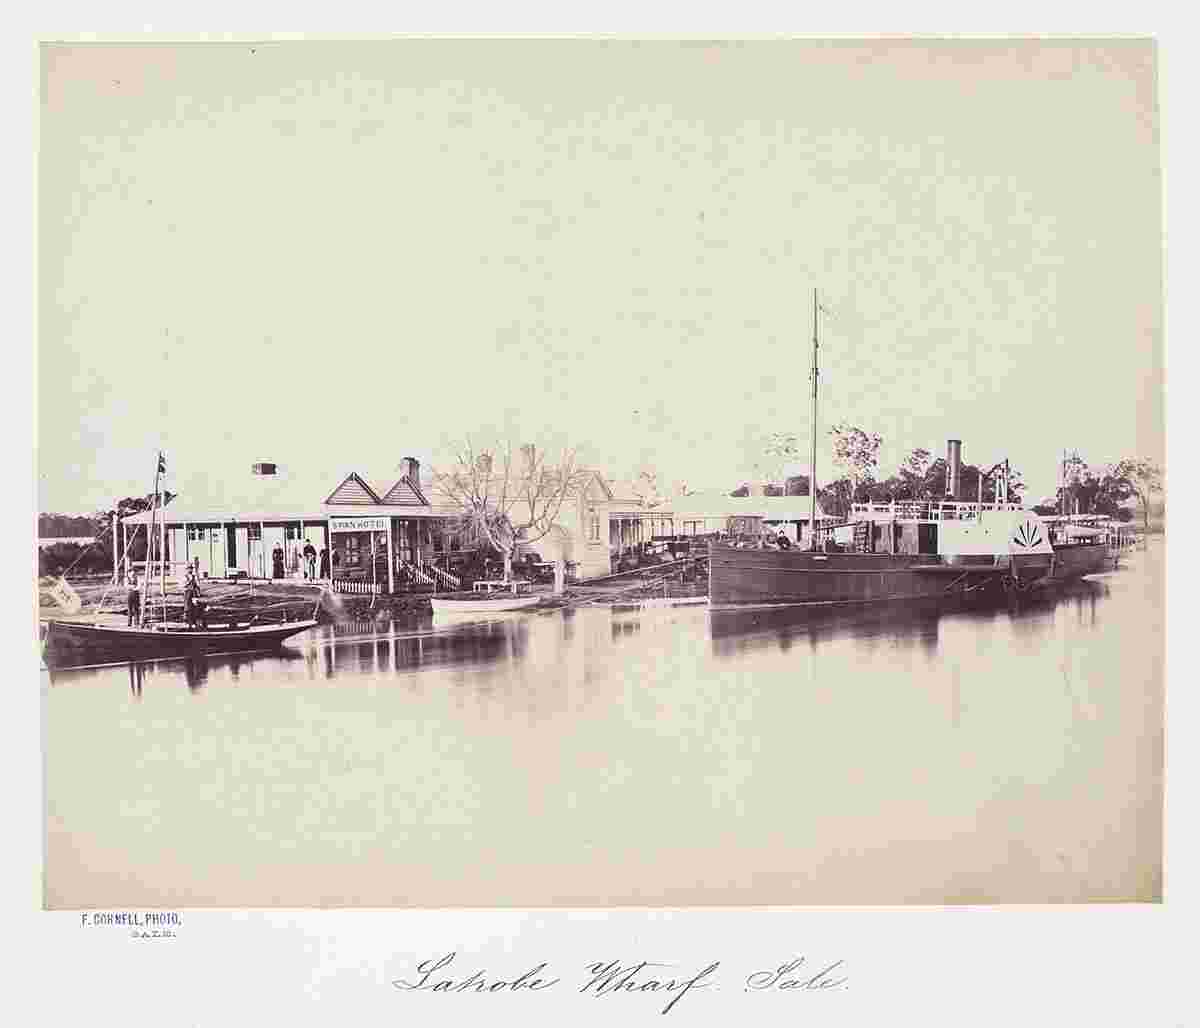 Sale. Latrobe Wharf, 'Swan' Hotel, between 1866 and 1885